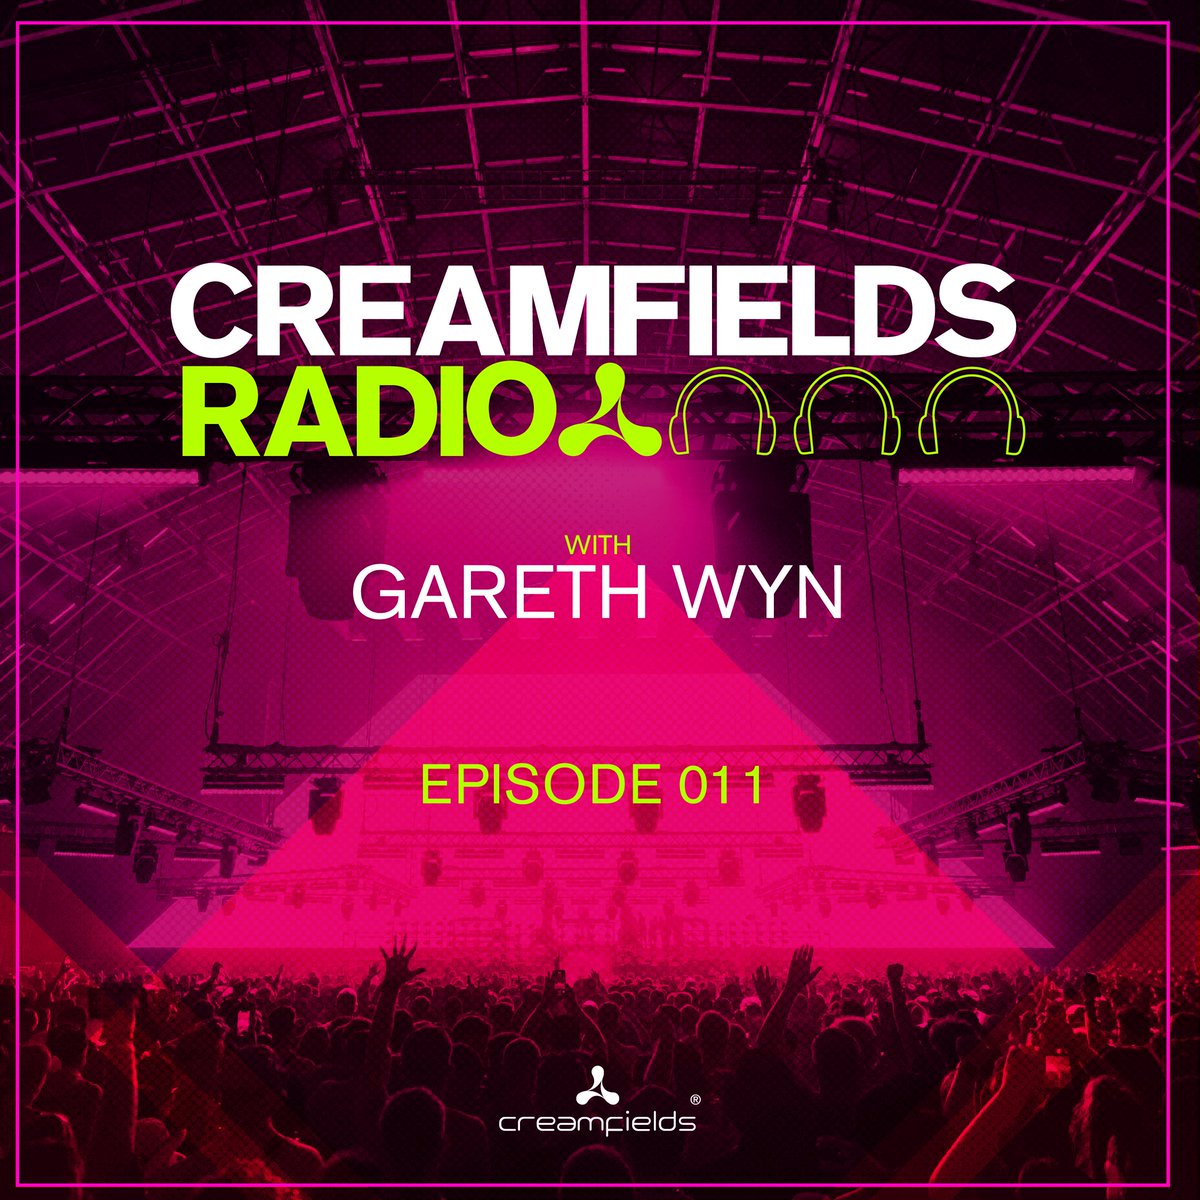 New! Listen to Creamfields Radio Episode 11 with @GarethWyn ft. new music from @SteveAngello @GorgonCity @JamieJonesMusic + many more! 👉 lnk.to/CreamfieldsRad…